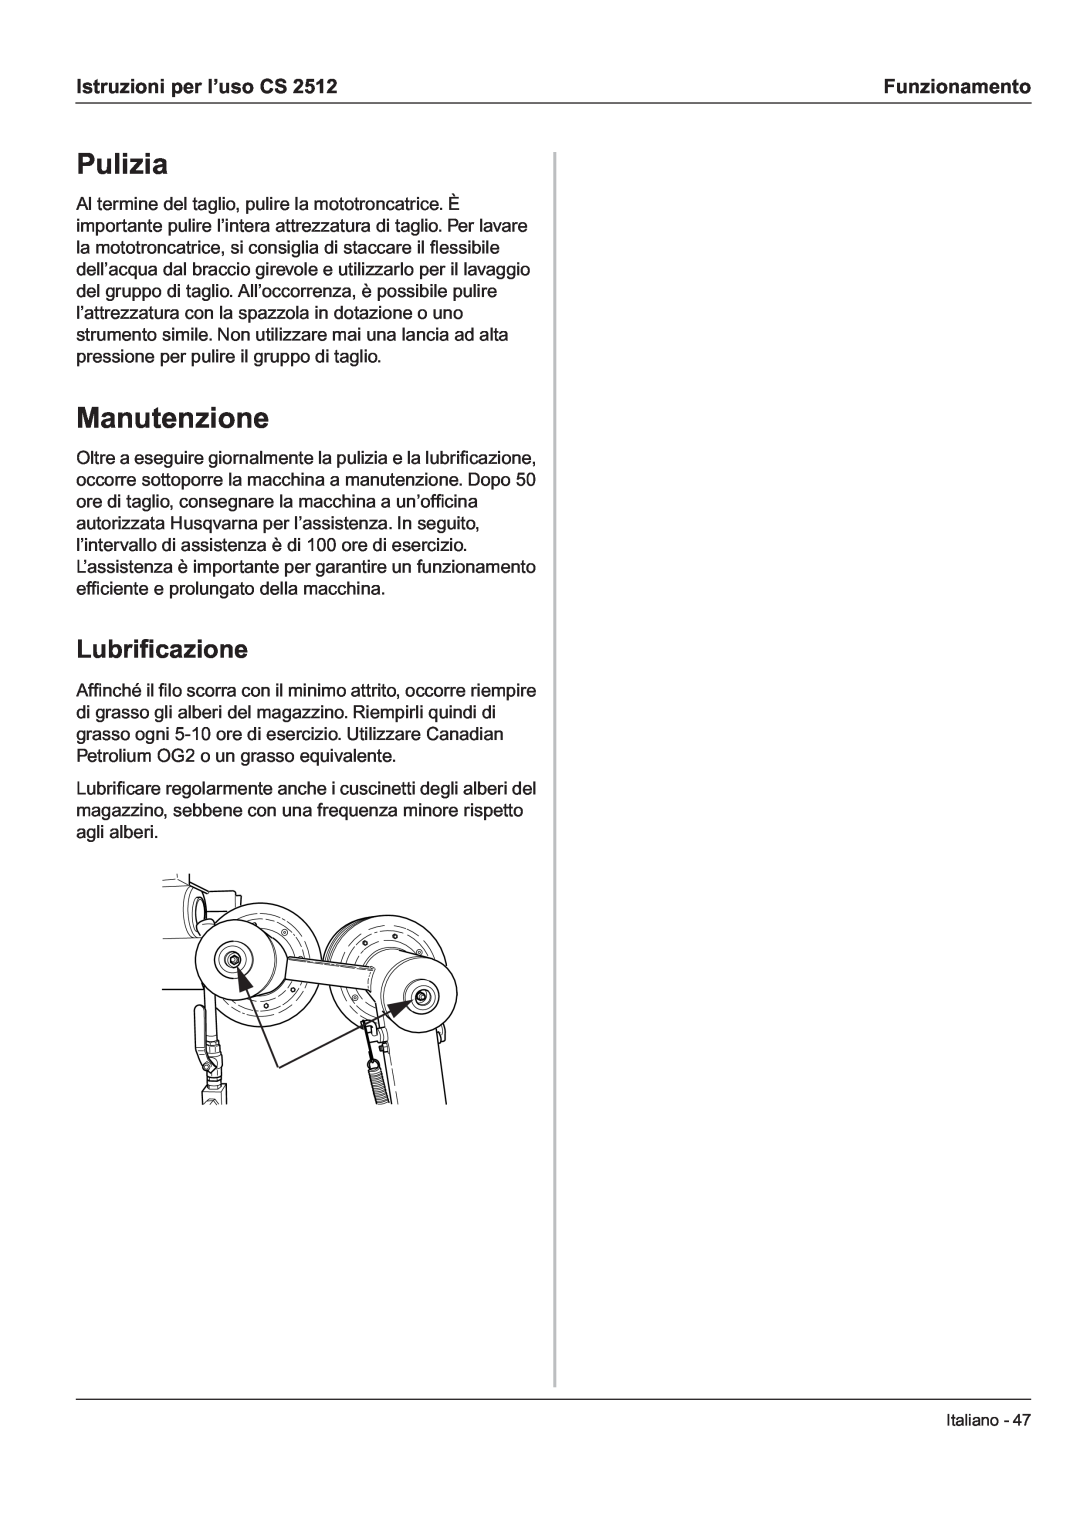 Husqvarna CS 2512 manual Pulizia, Manutenzione, Lubriﬁcazione, Istruzioni per l’uso CS, Funzionamento 